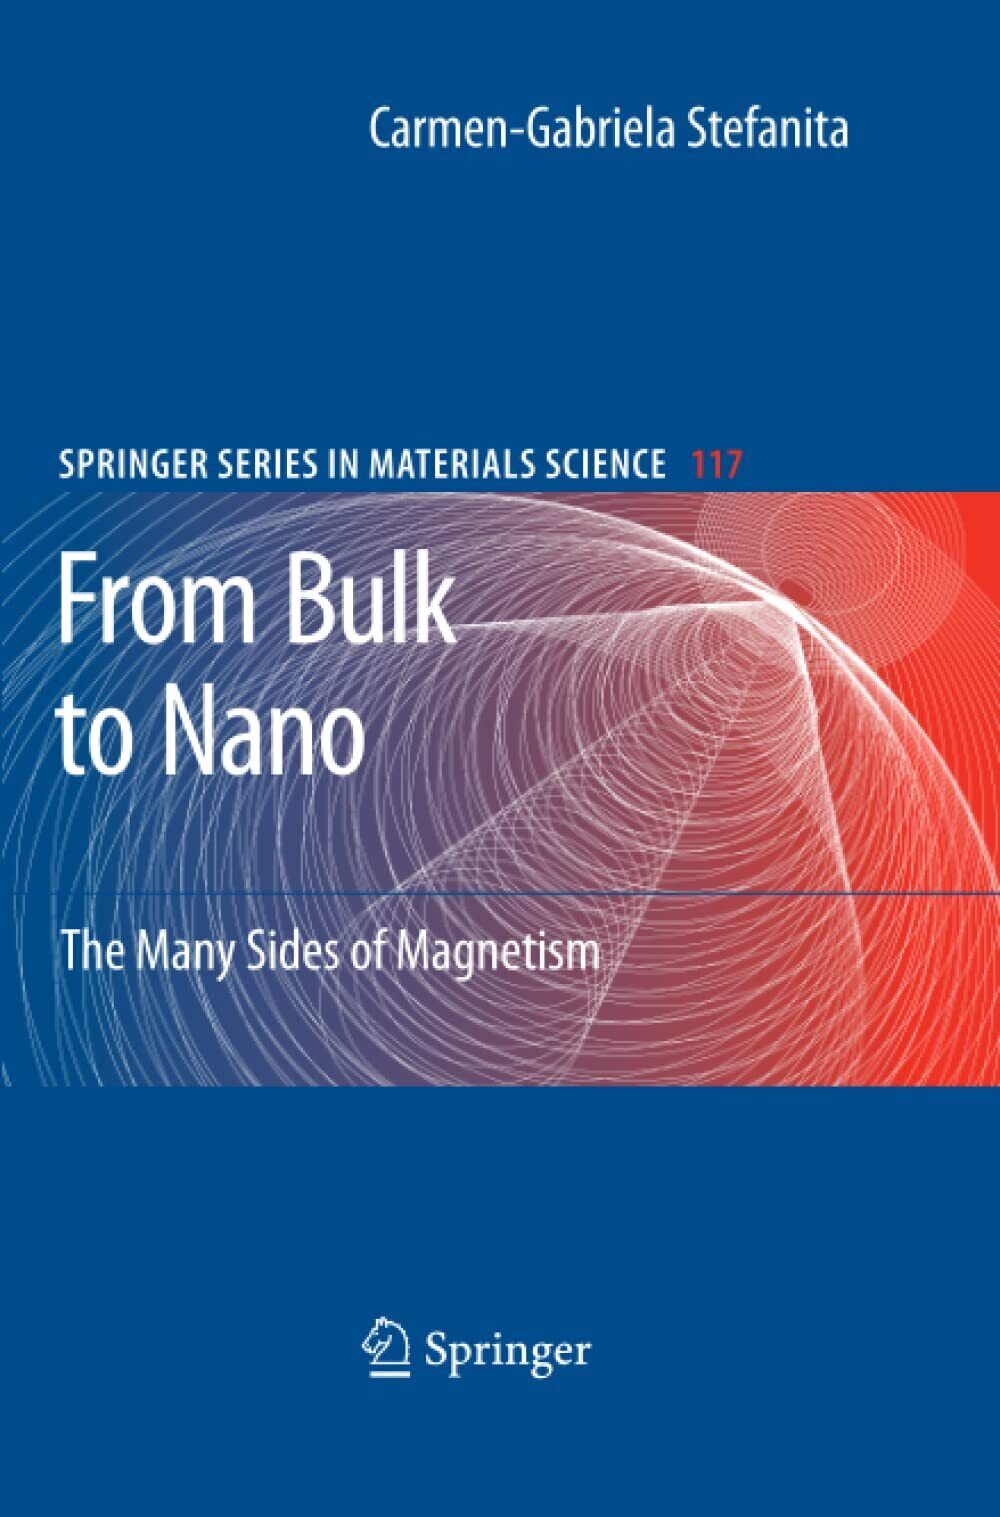 From Bulk to Nano - Carmen-Gabriela Stefanita - Springer, 2010